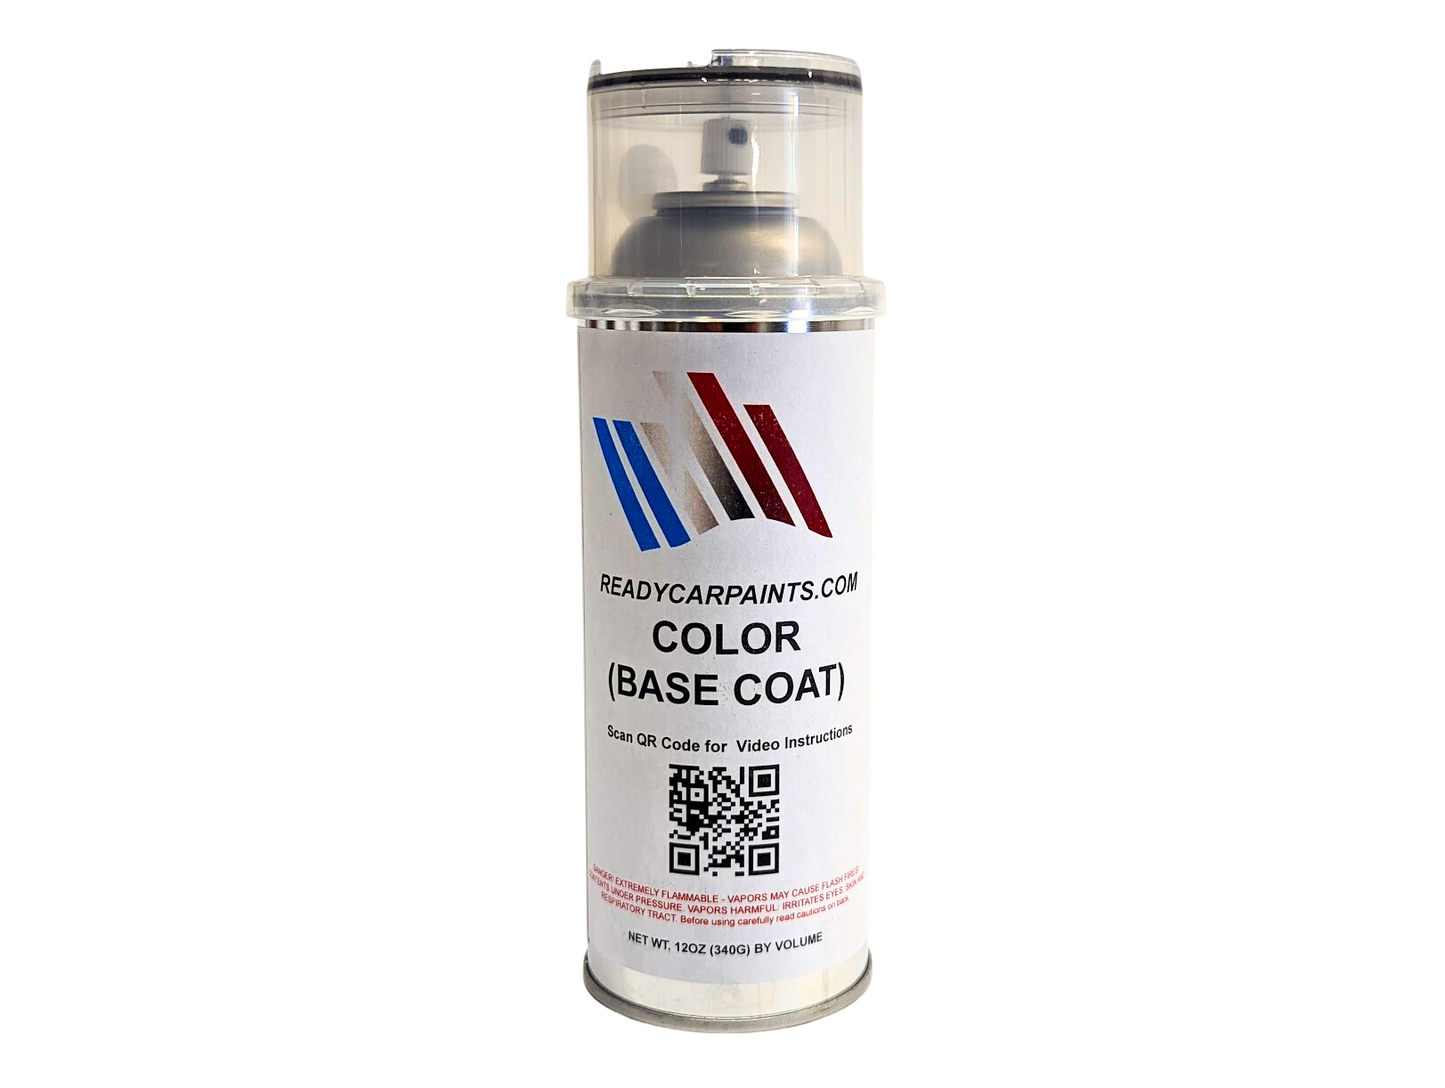 FIAT 620 Alluminio Metallic Automotive Spray Paint 100% OEM Color Match